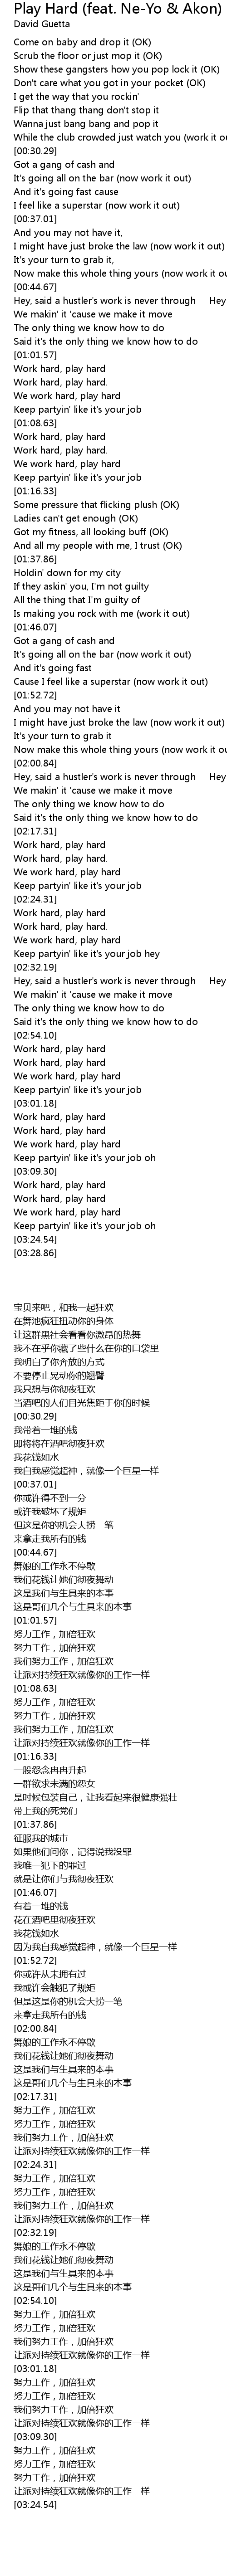 Play Hard Feat Ne Yo Akon New Edit Lyrics Follow Lyrics